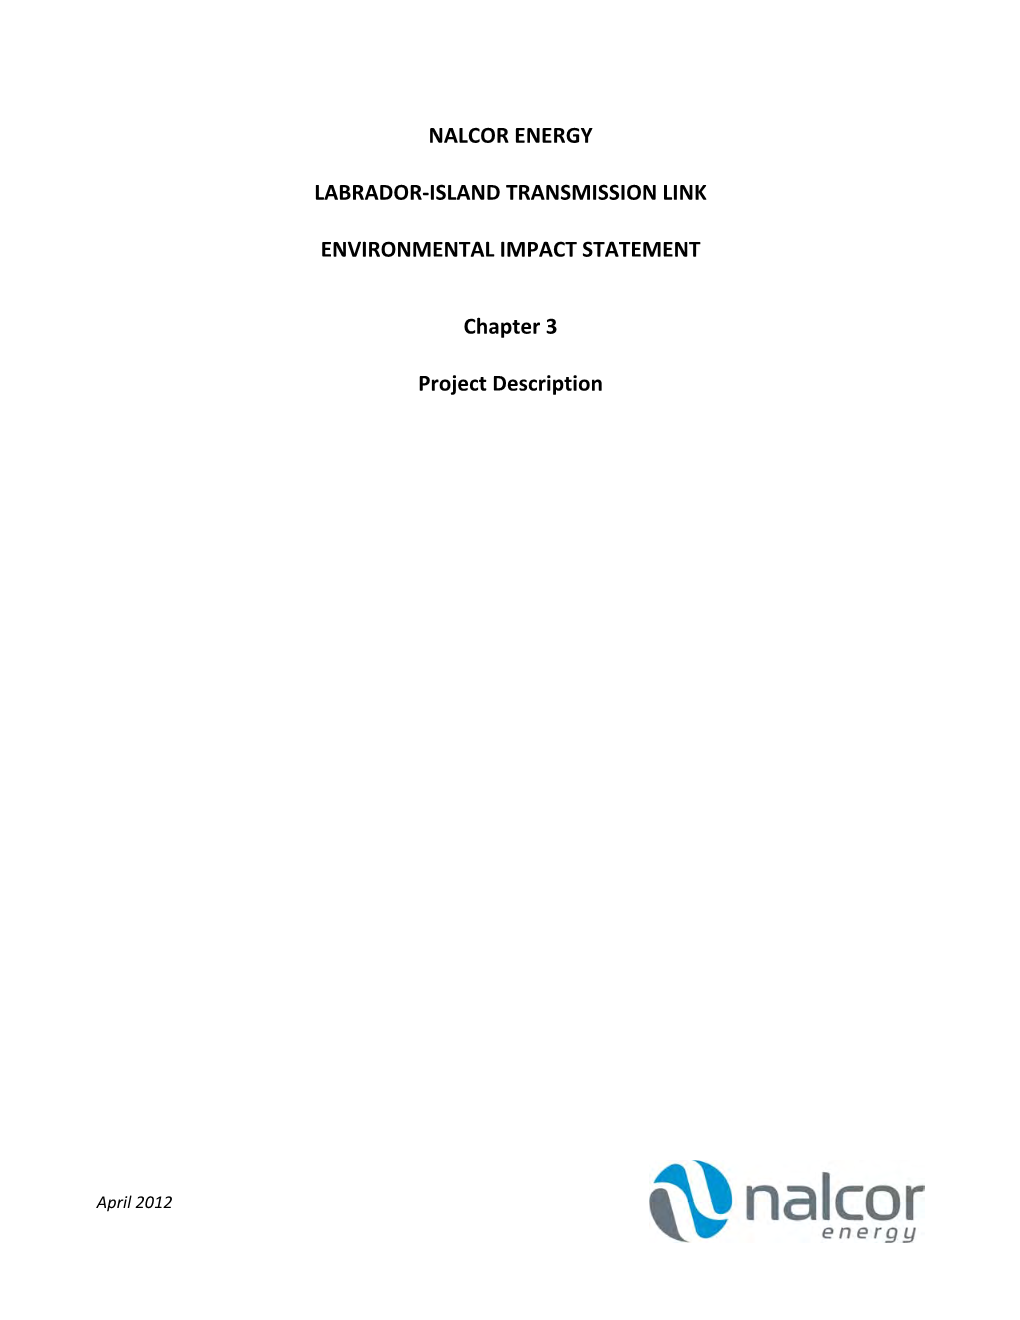 Labrador-Island Transmission Link Environmental Impact Statement